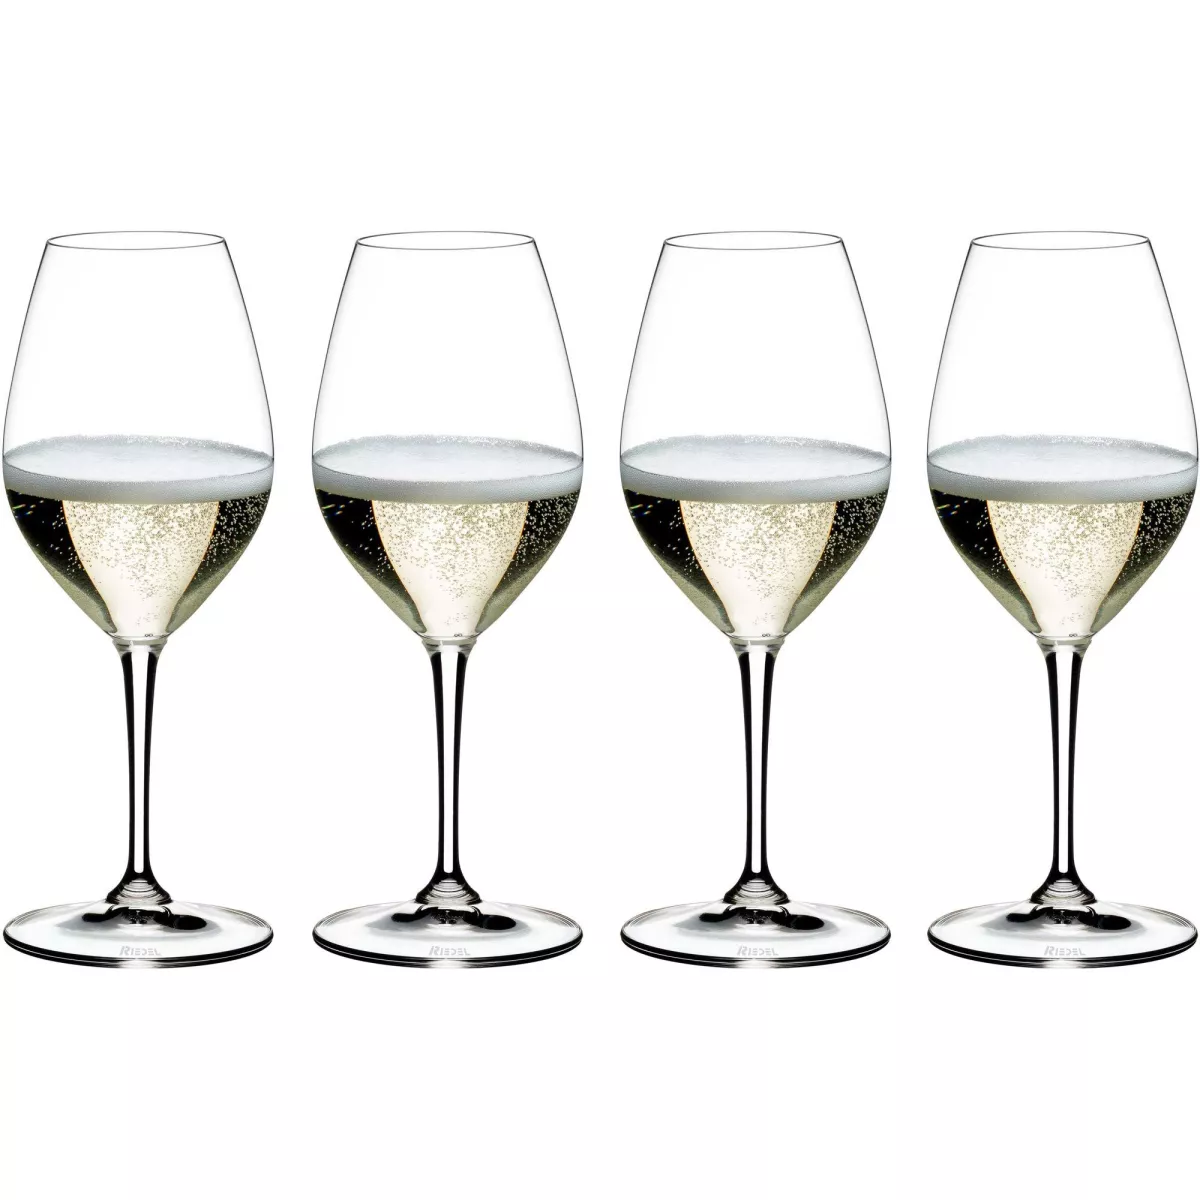 #1 - Riedel Vinum Champagne Glas 4 pak